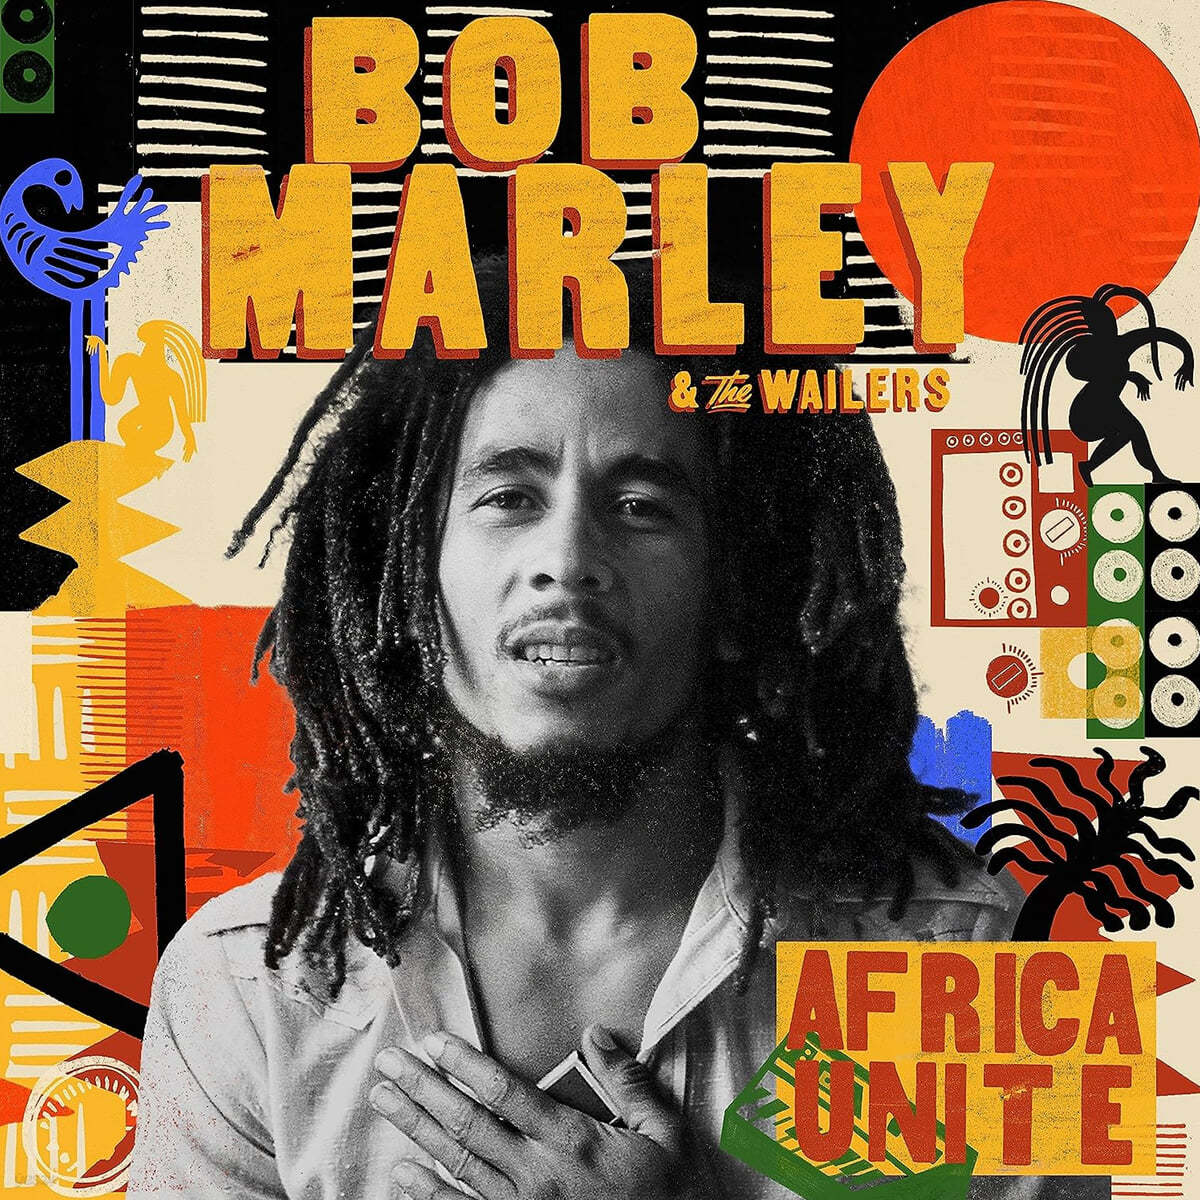 Bob Marley & The Wailers (밥 말리 & 더 웨일러스) - Africa Unite